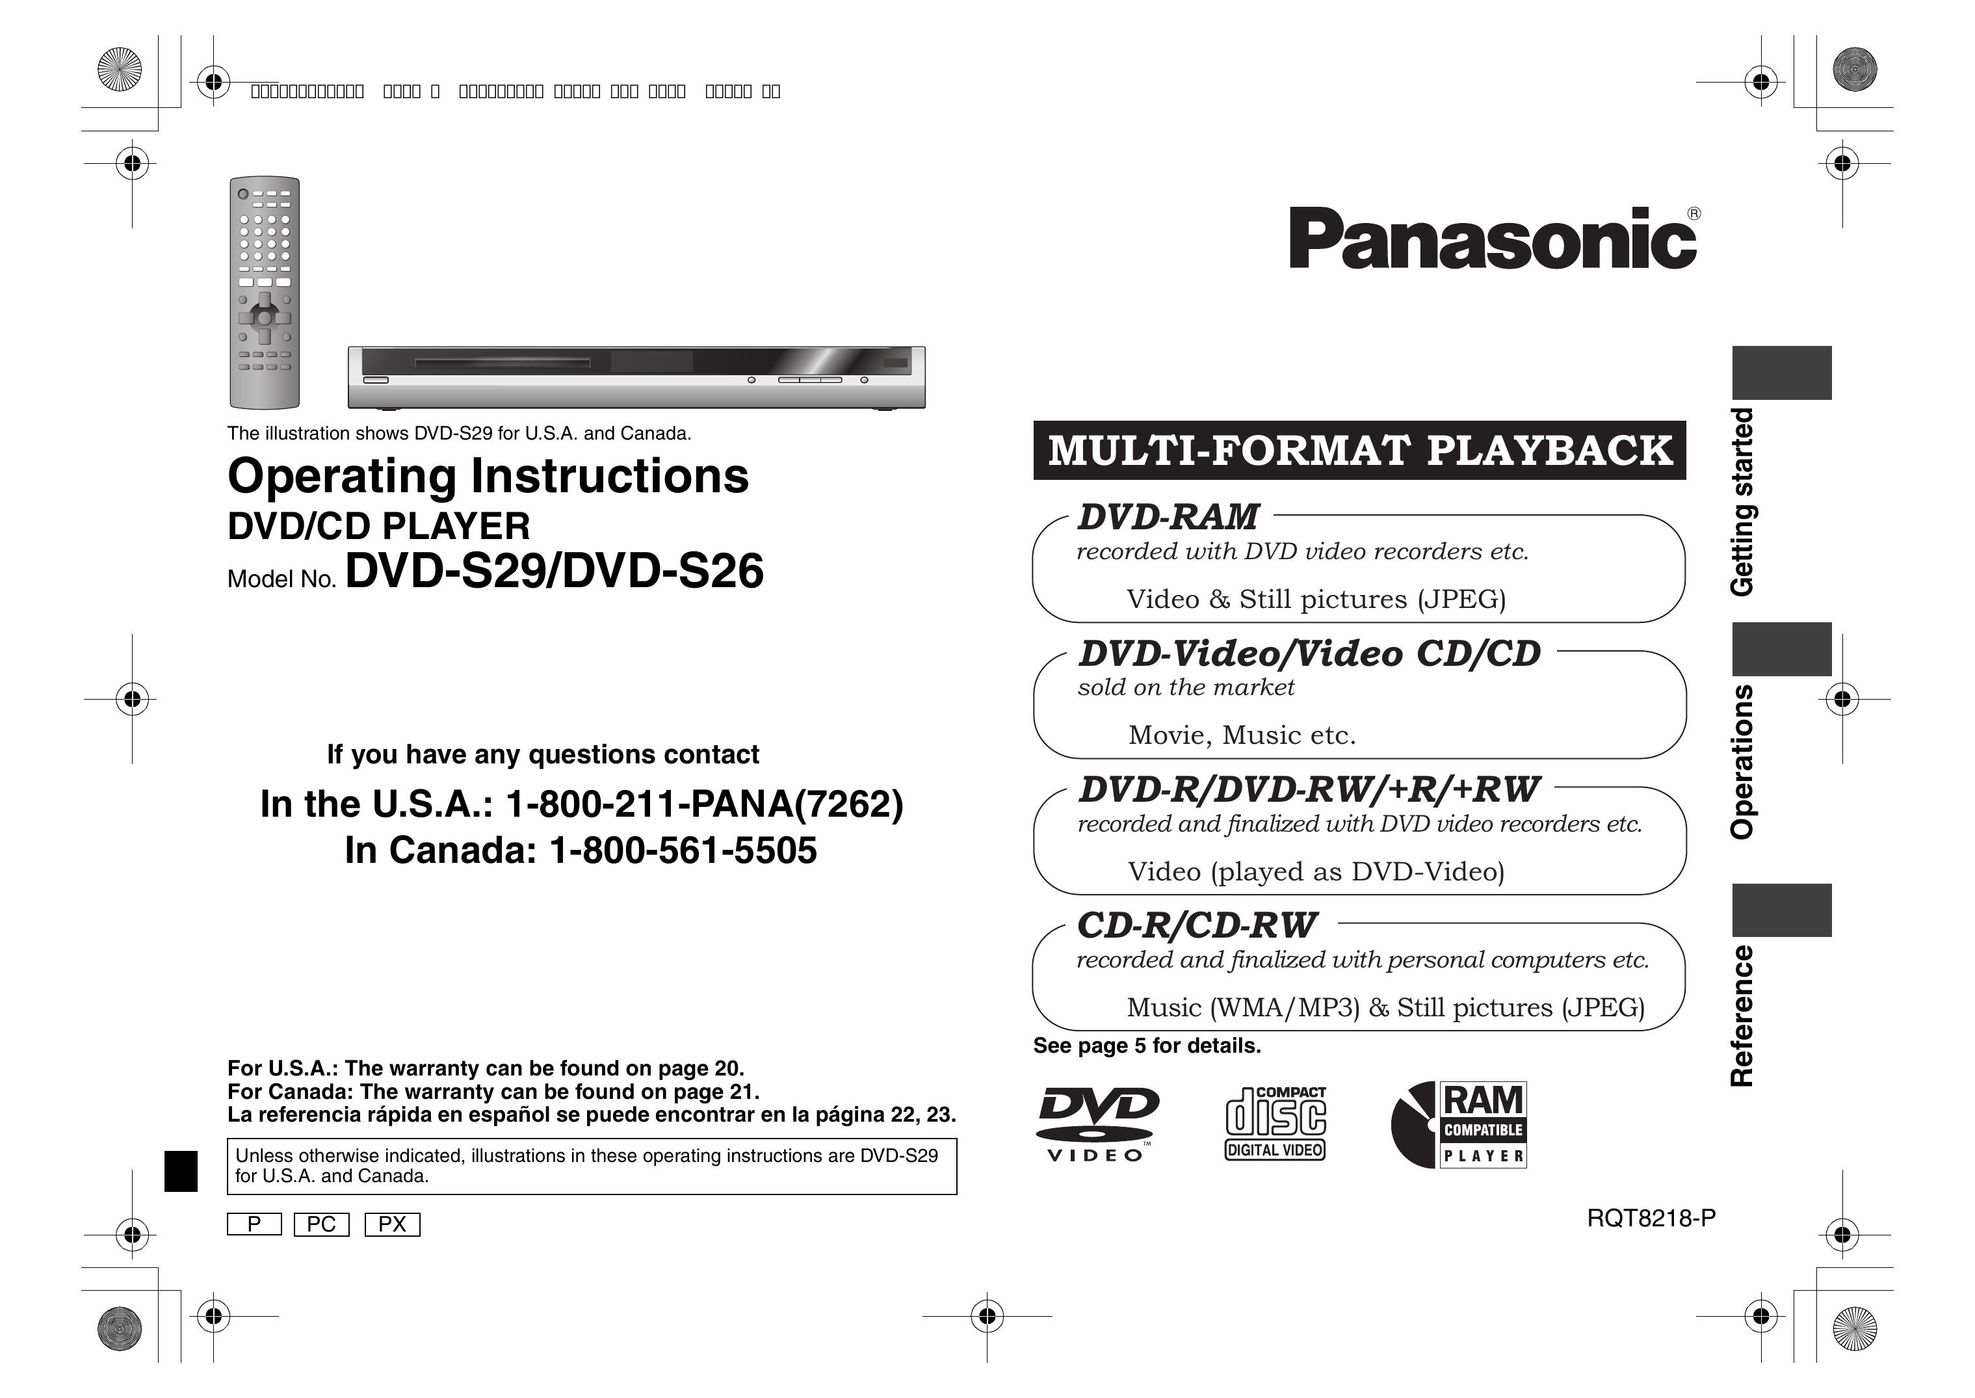 Panasonic RQT8218-P Portable DVD Player User Manual